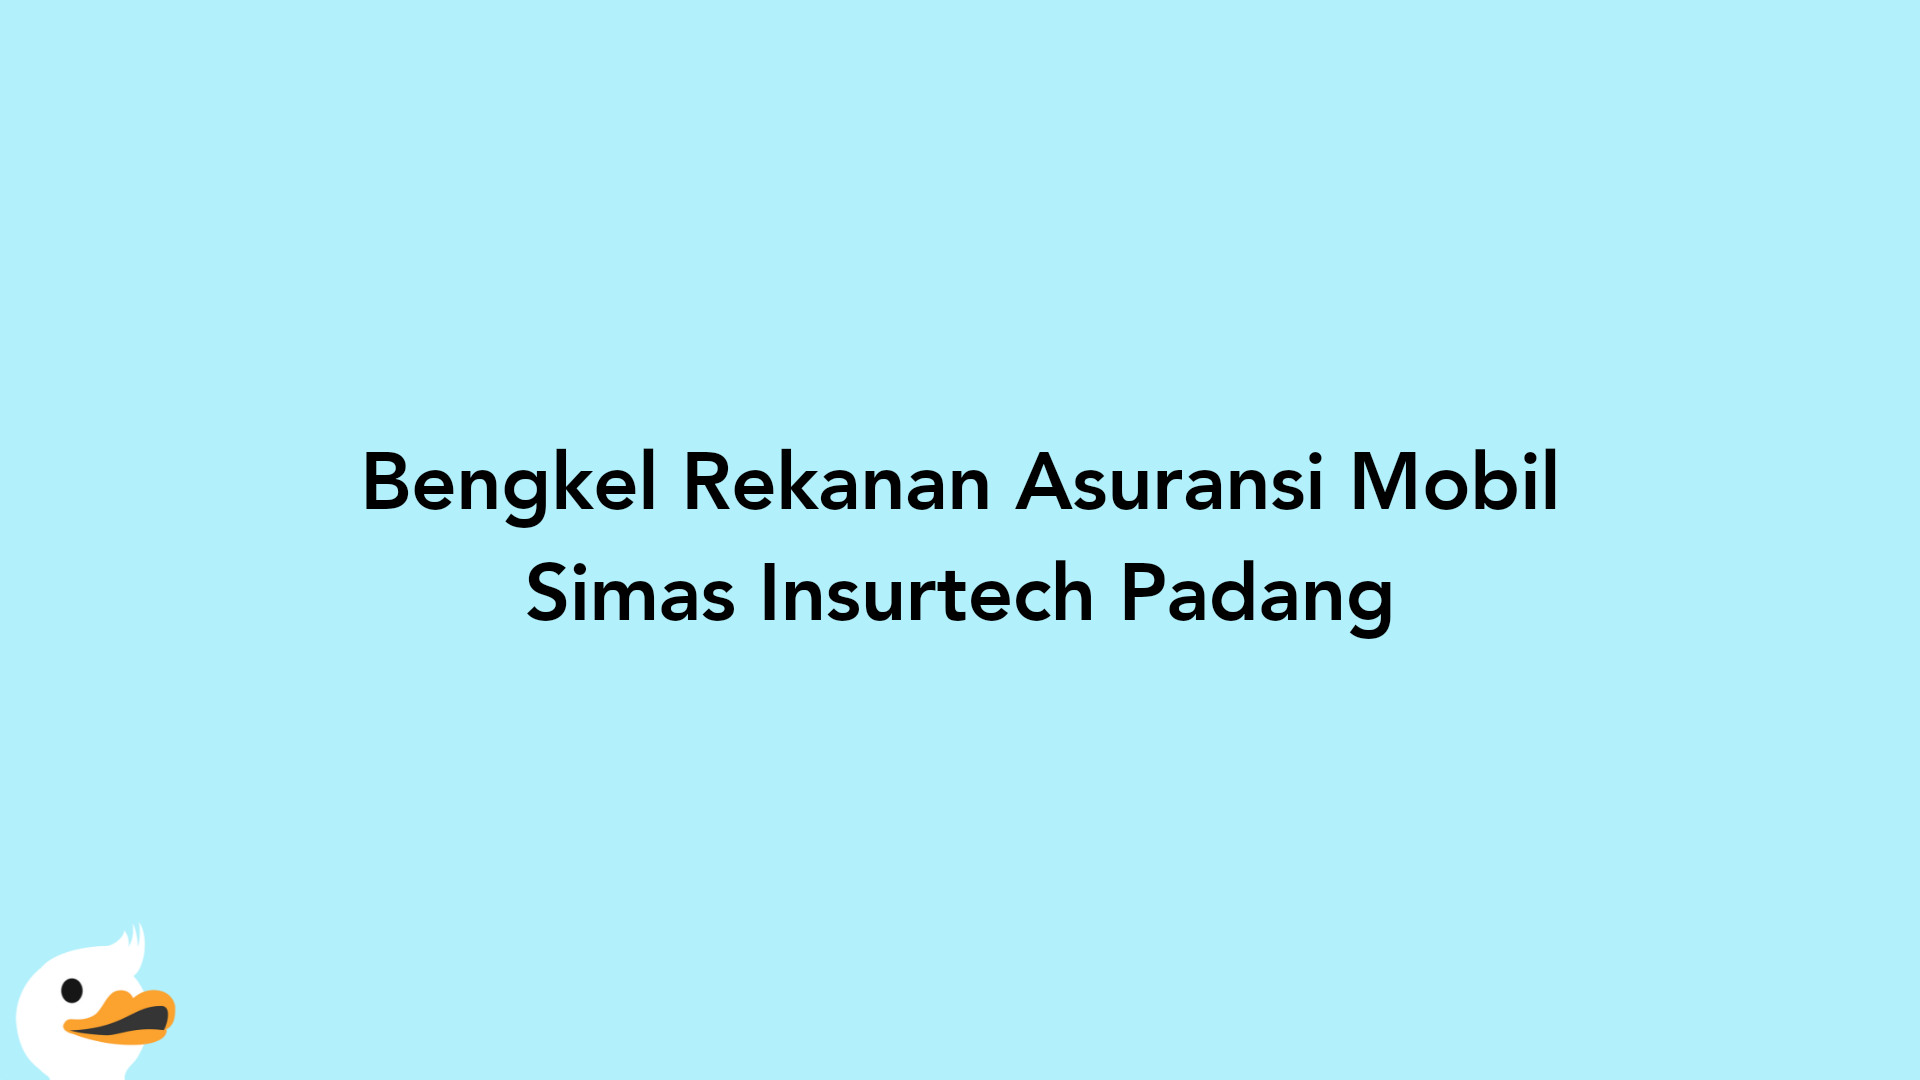 Bengkel Rekanan Asuransi Mobil Simas Insurtech Padang